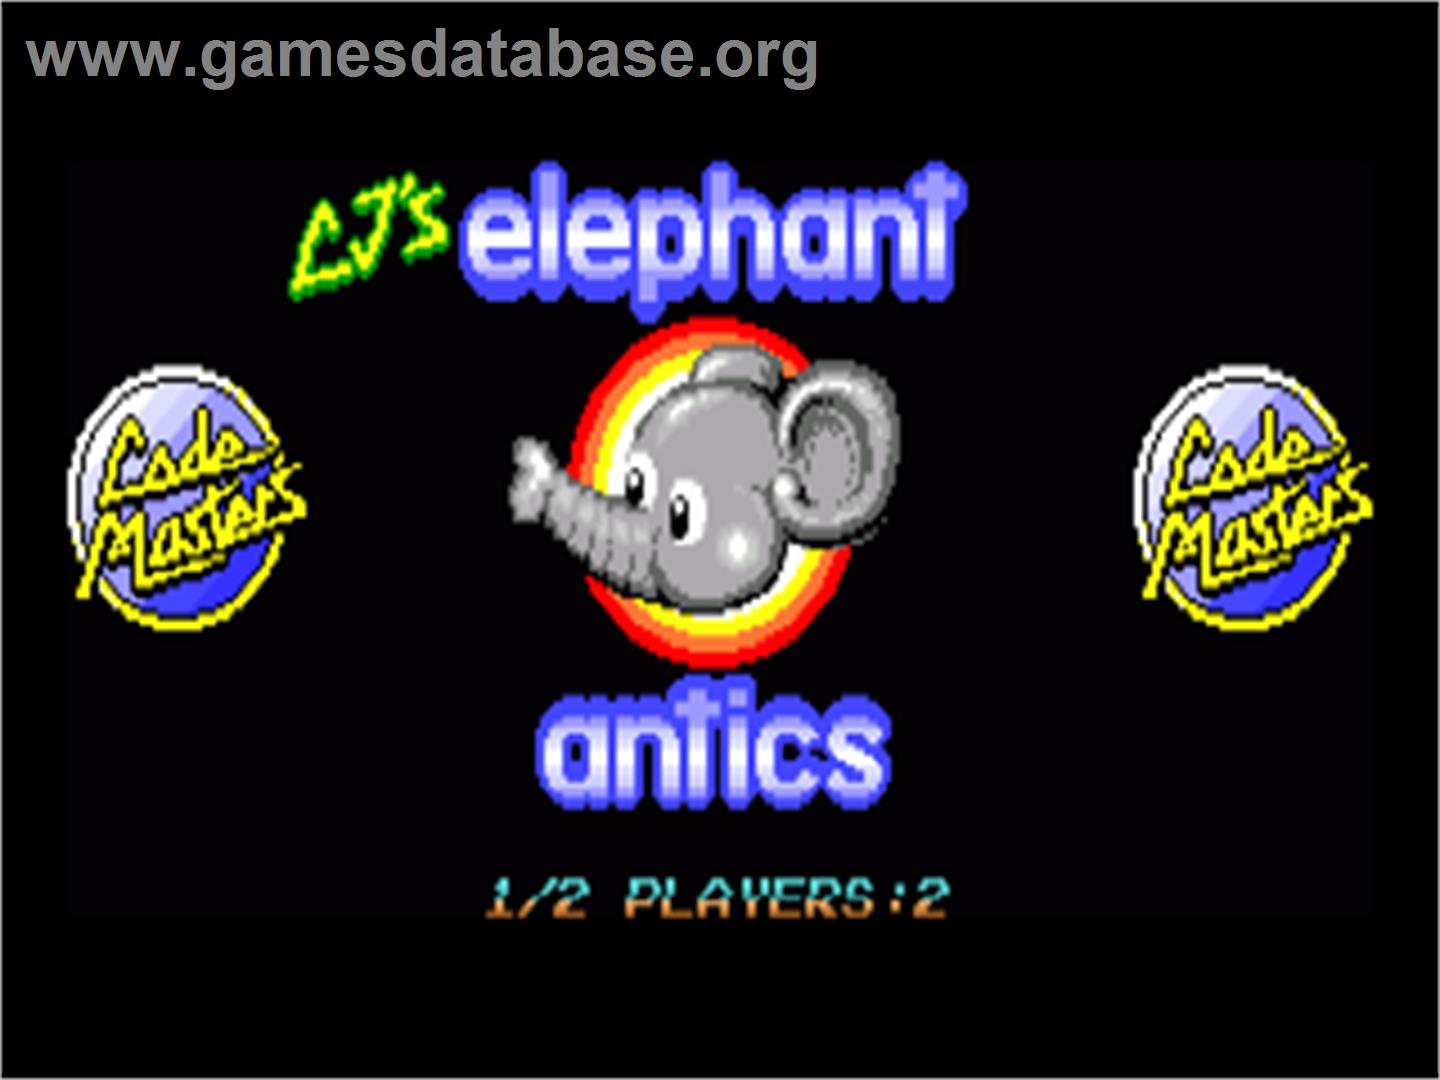 CJ's Elephant Antics - Commodore Amiga - Artwork - Title Screen